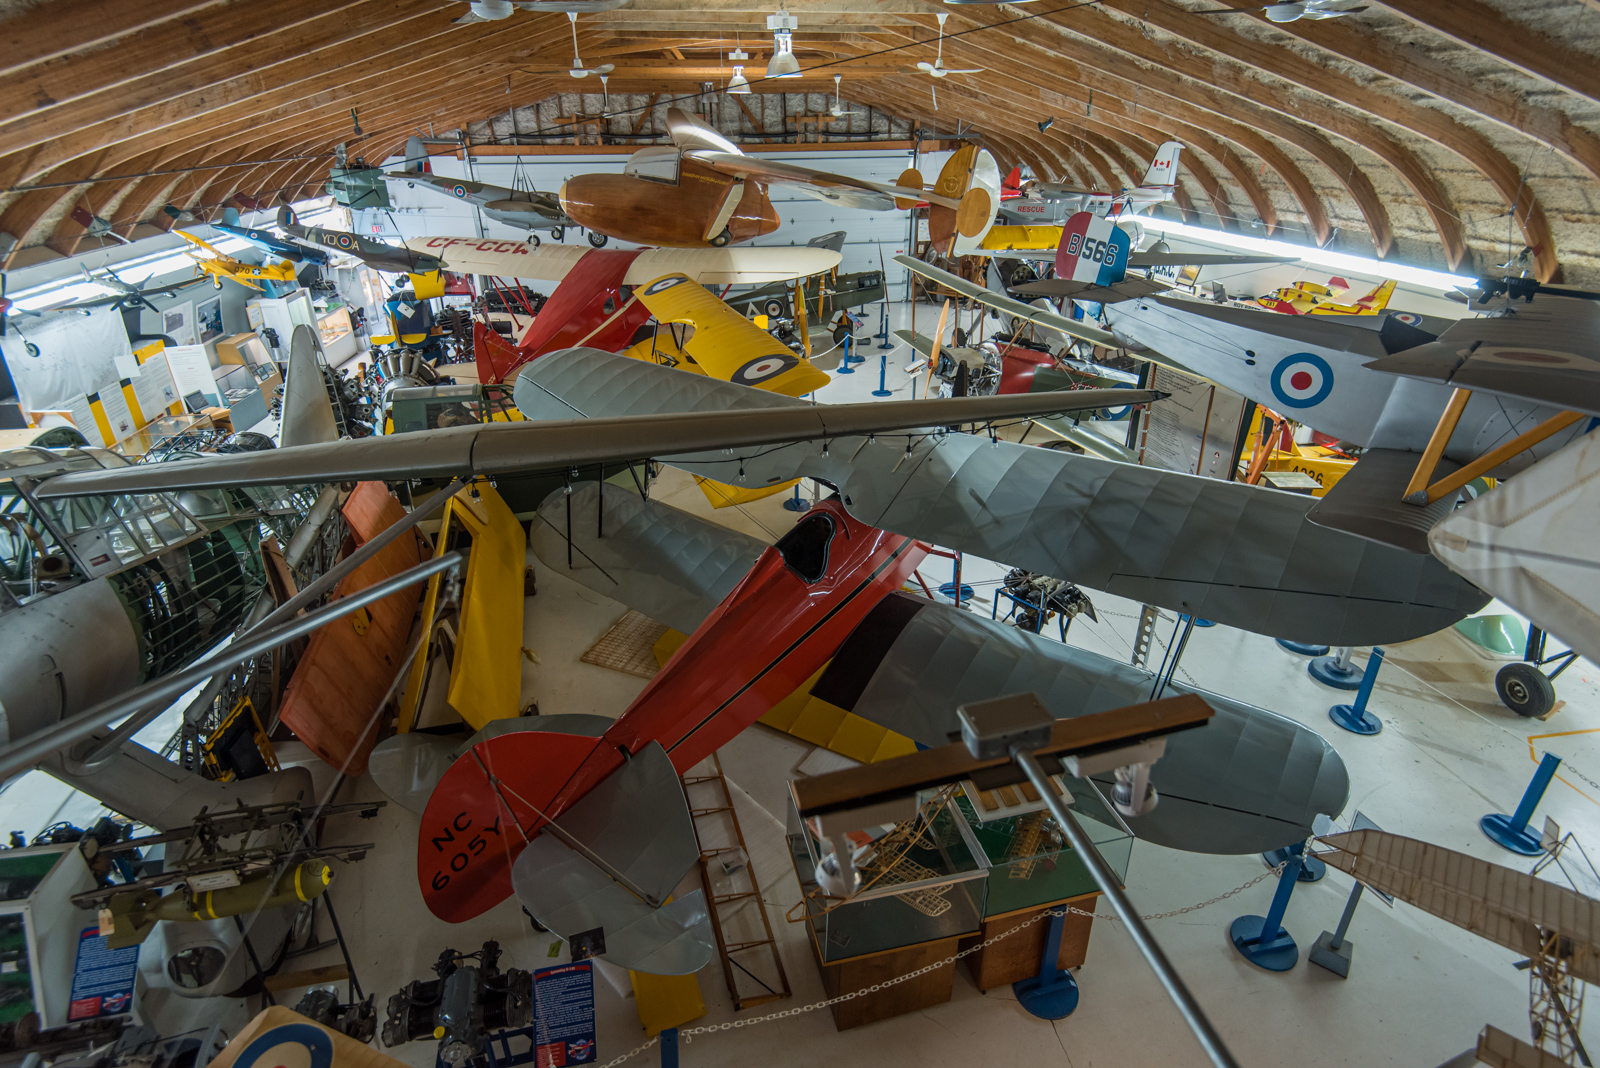 Canadian Museum of Flight